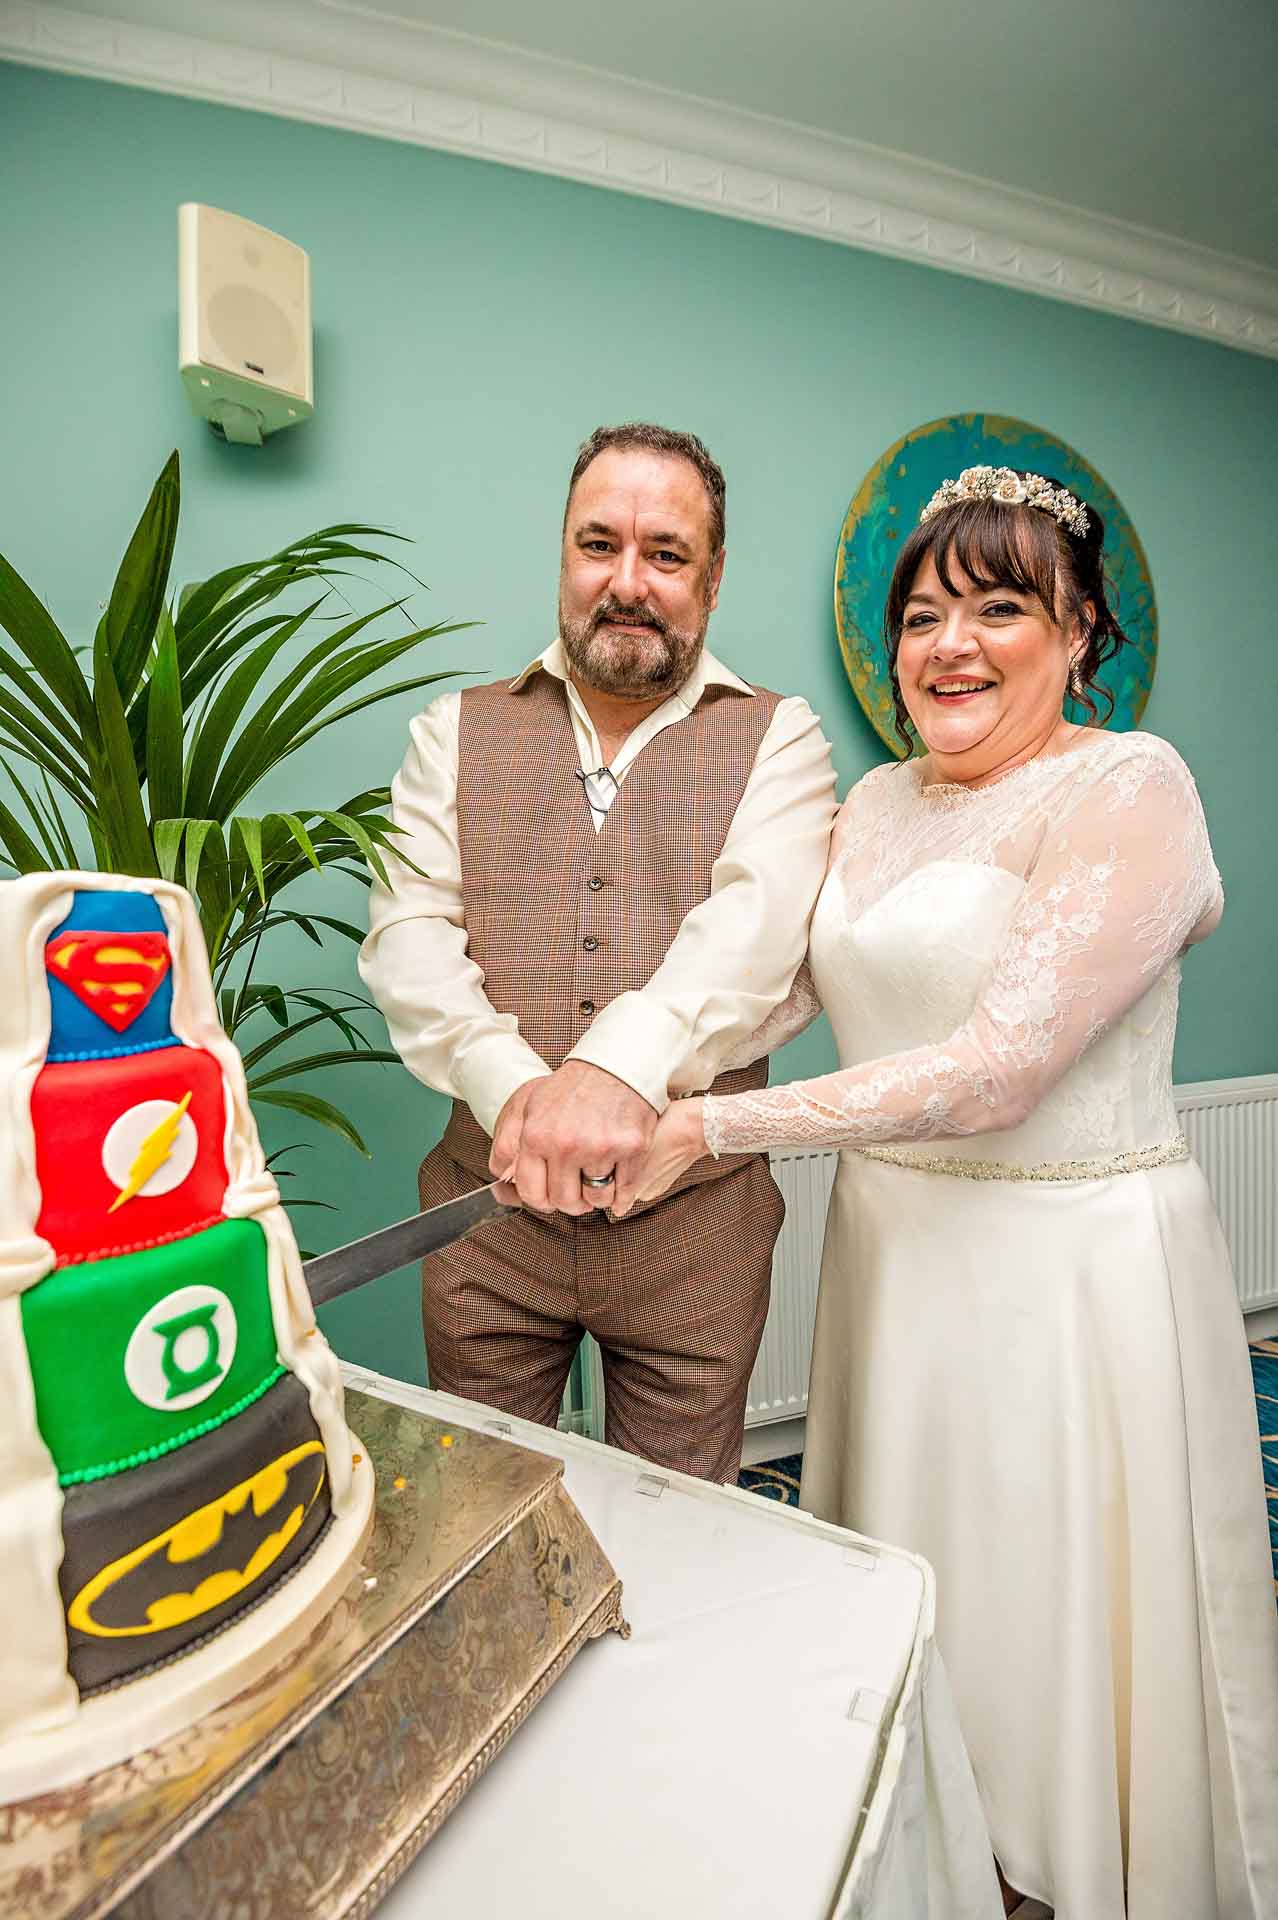 Bride and Groom Cutting Superhero Cake at Wedding